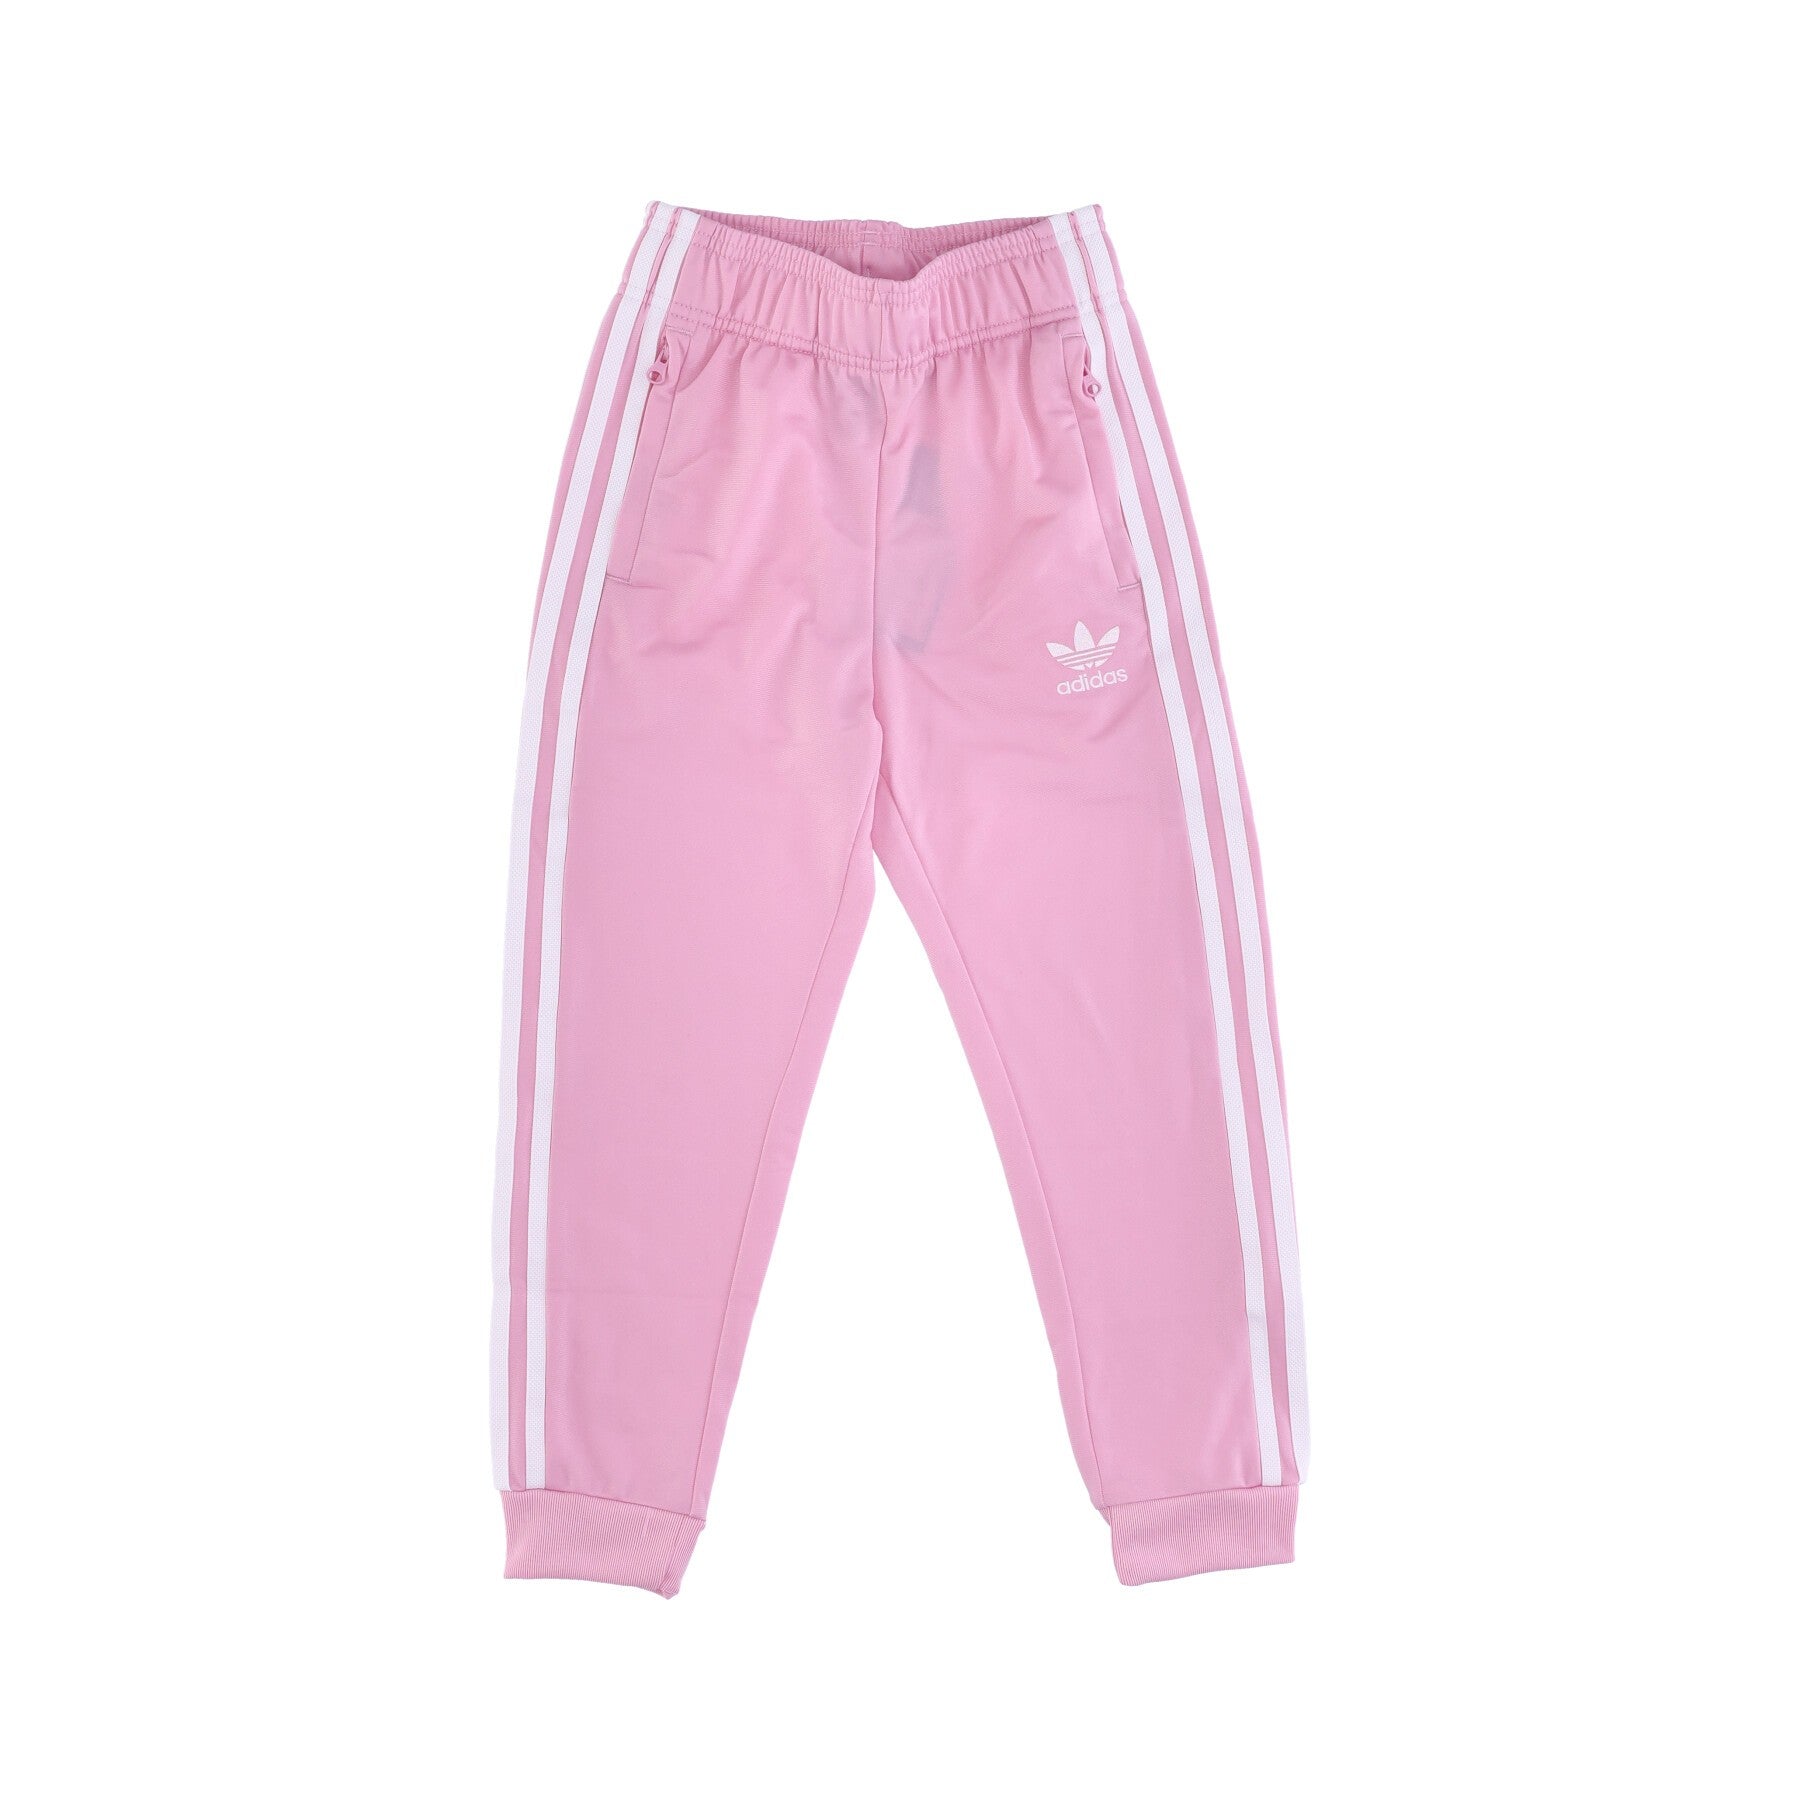 Adidas, Pantalone Tuta Ragazza Track Pants, True Pink/white